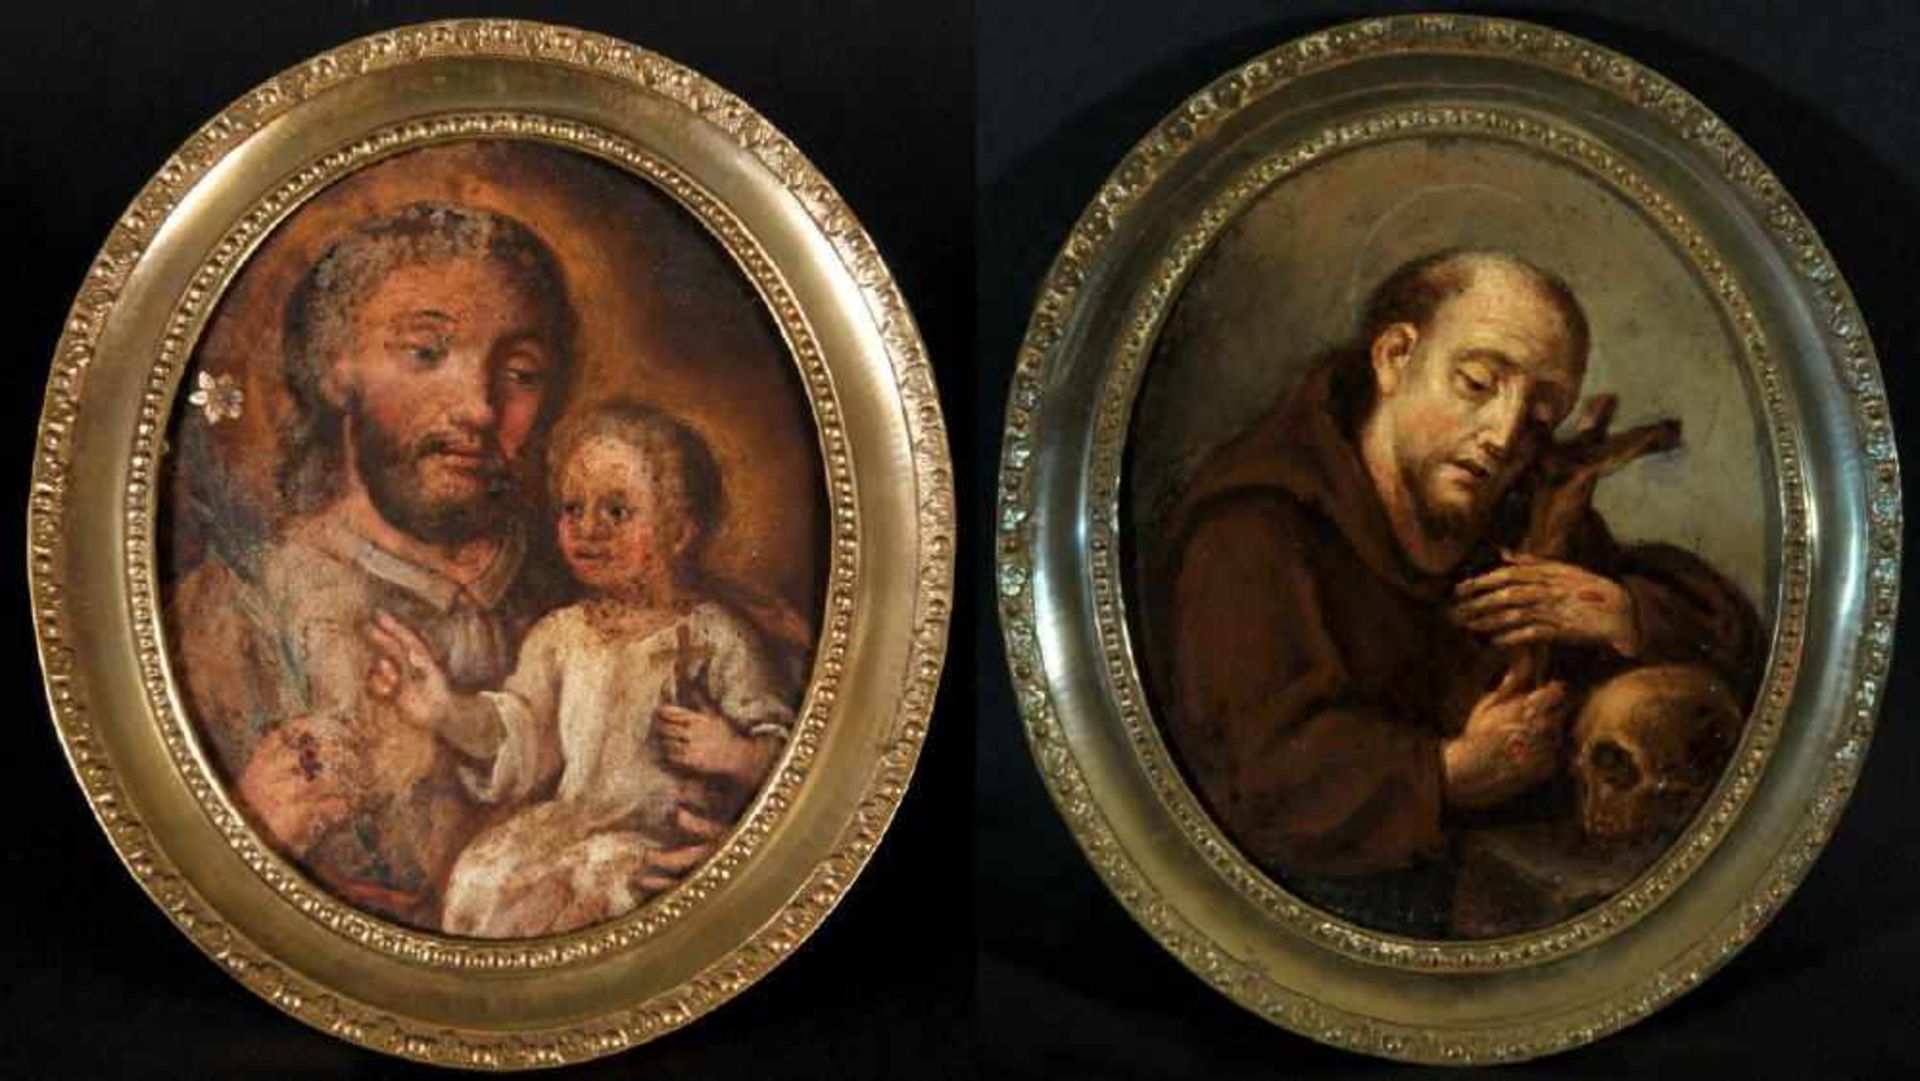 Bildnismaler des 18./19. Jh.Öl/Metall, oval, 17,5 x 14,5 cm, recto " Joseph mit Jesusknabe ",